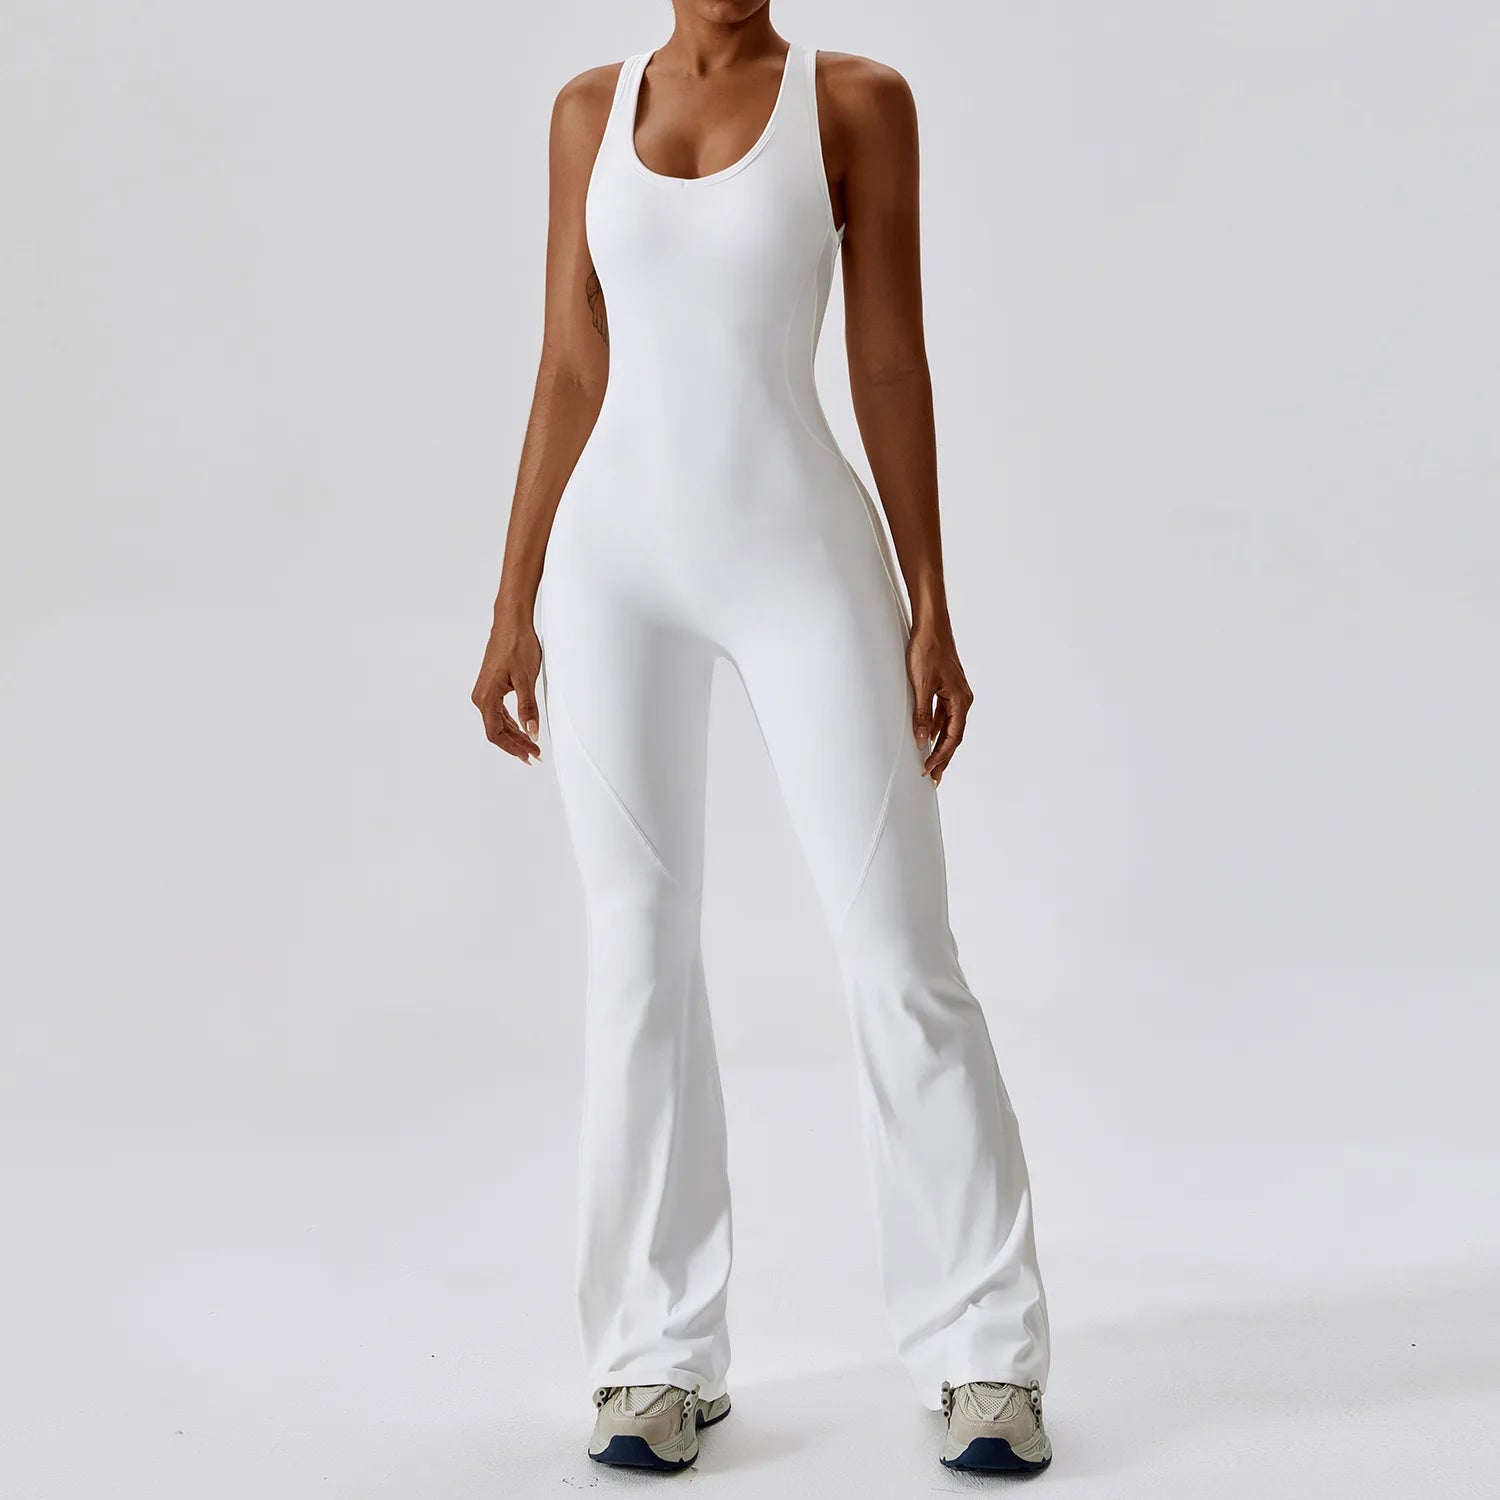 TEEK - Free Feeling Stretch Bodysuit JUMPSUIT theteekdotcom White S 